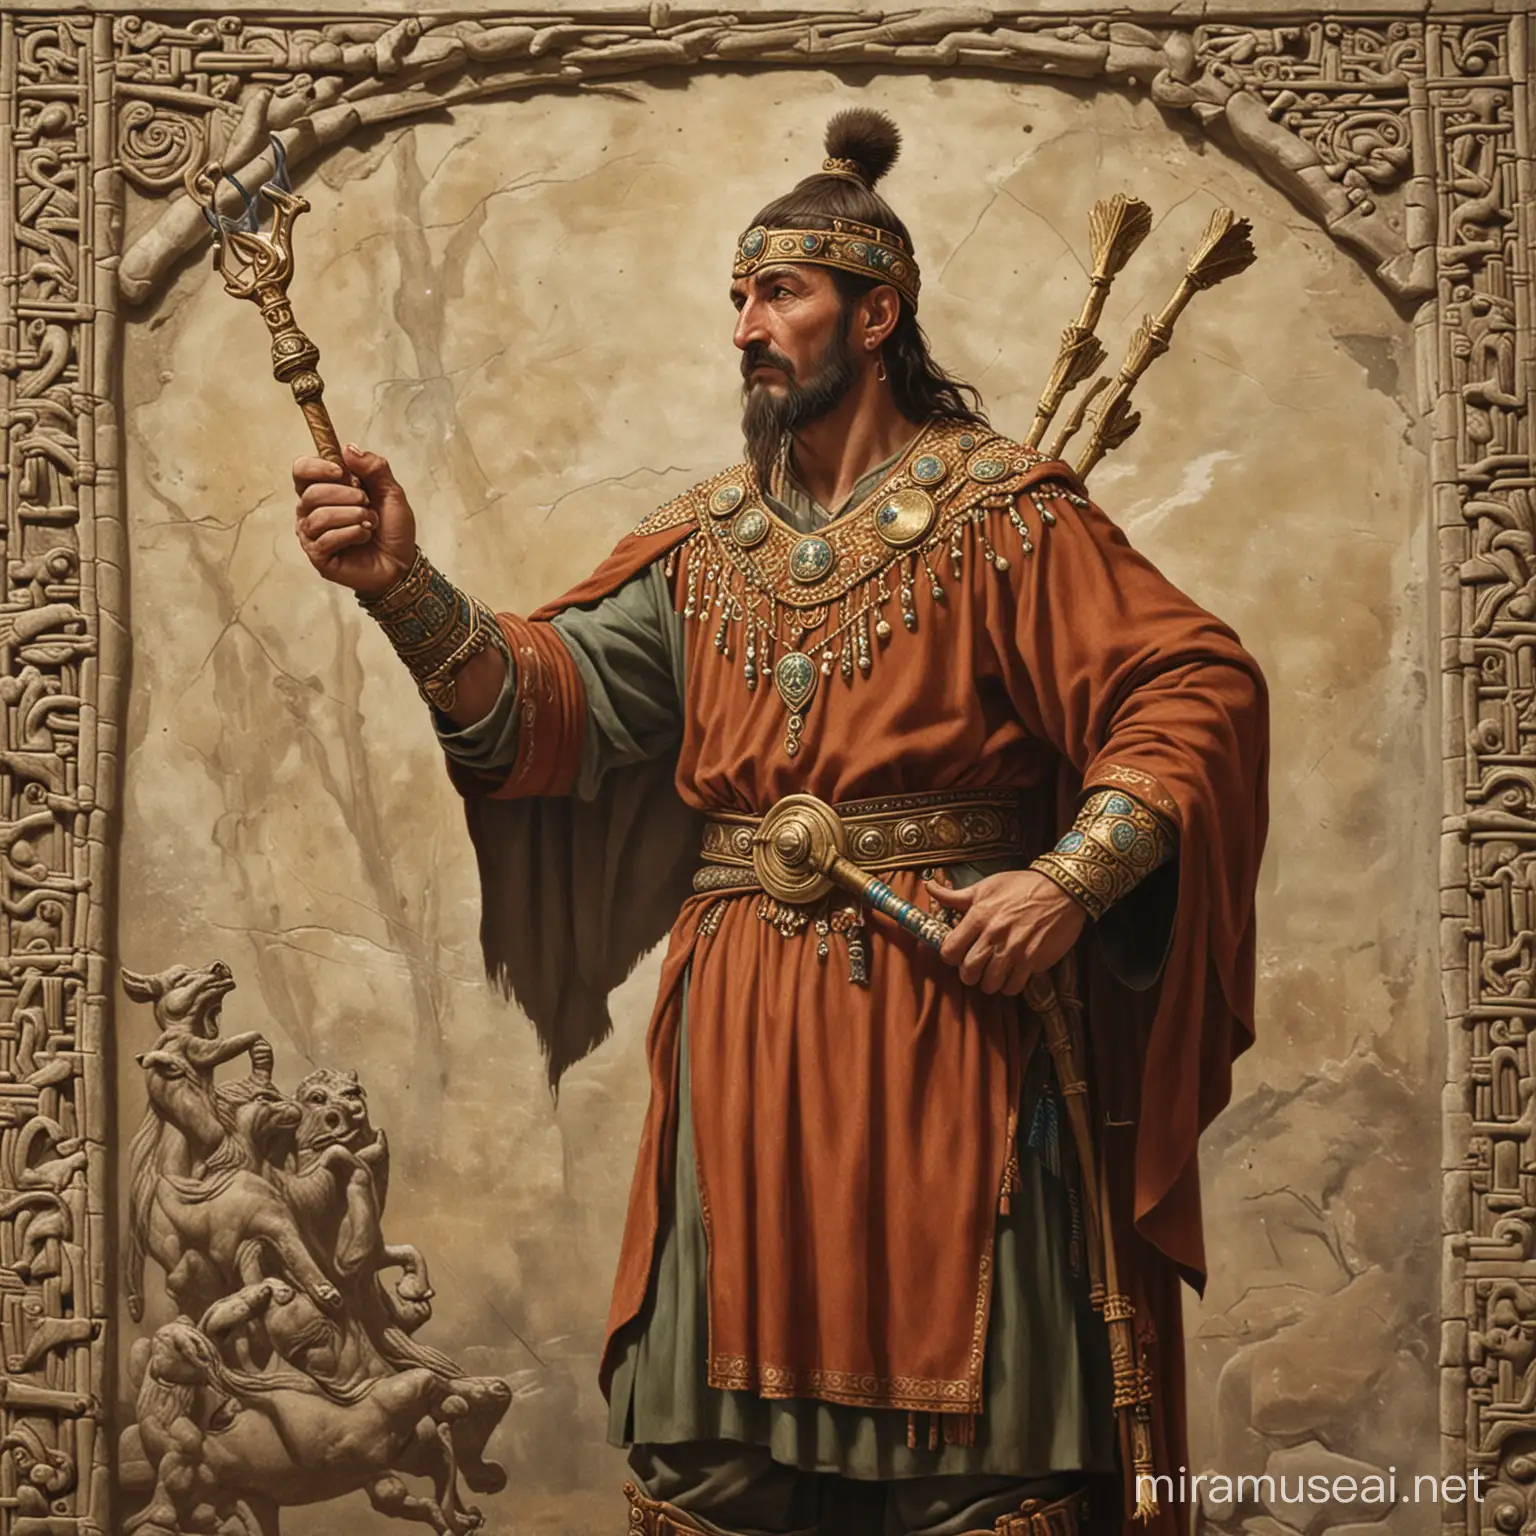 Scythian priest having a scepter that shoots magic arrows